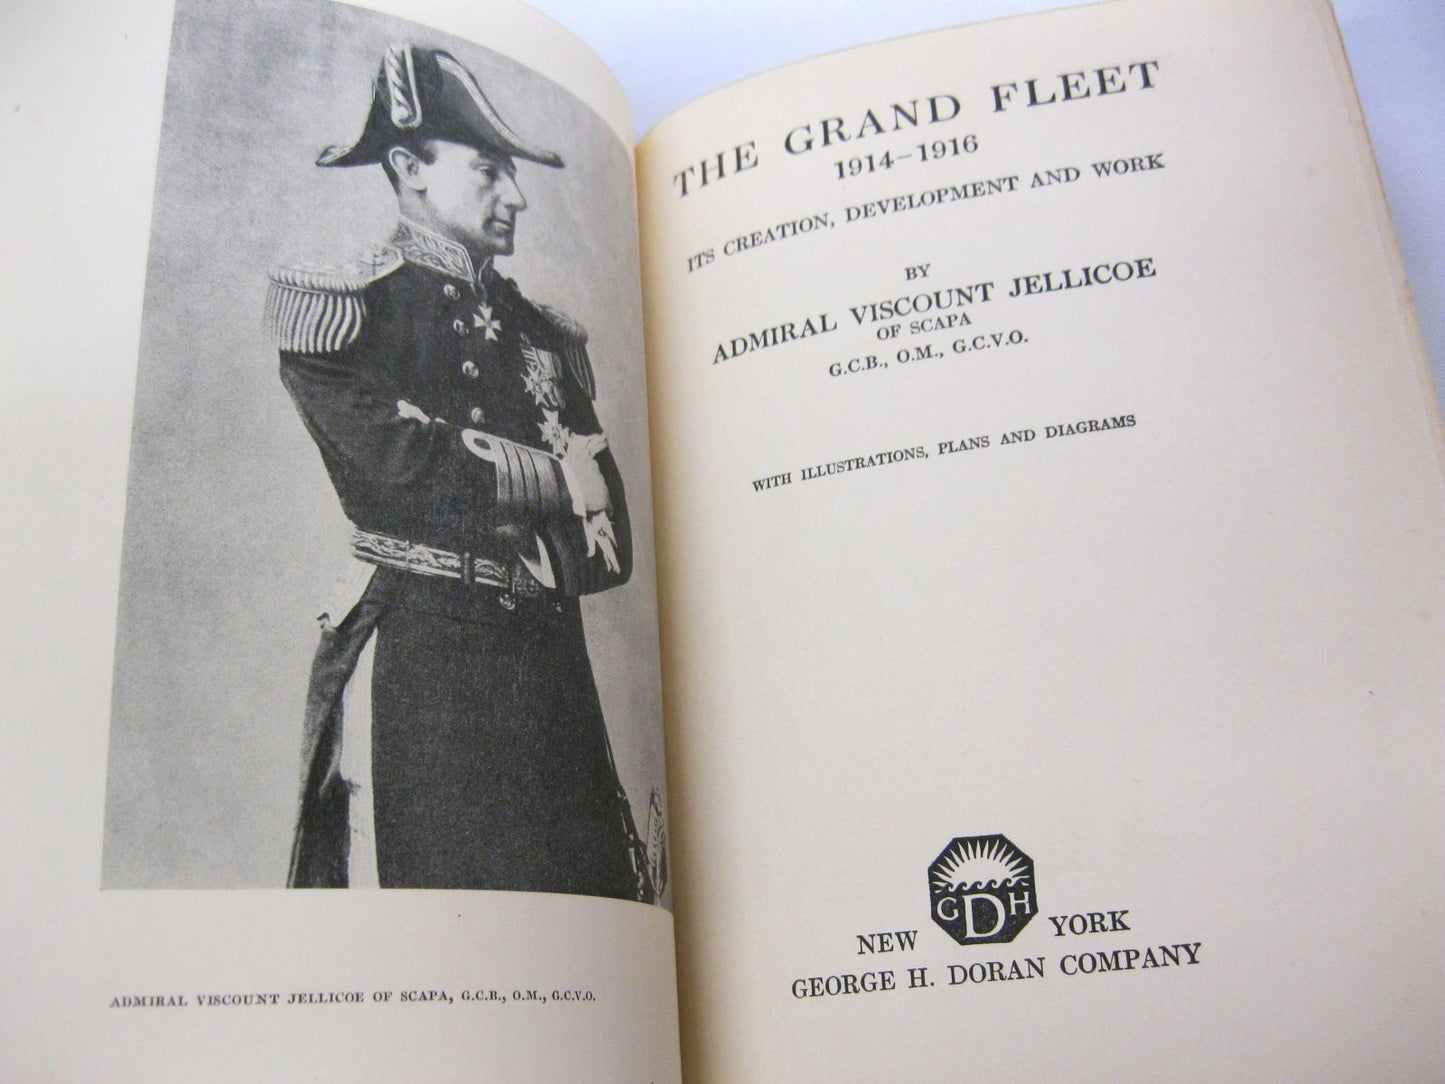 The Grand Fleet 1914-1916 by Admiral Viscount Jellicoe